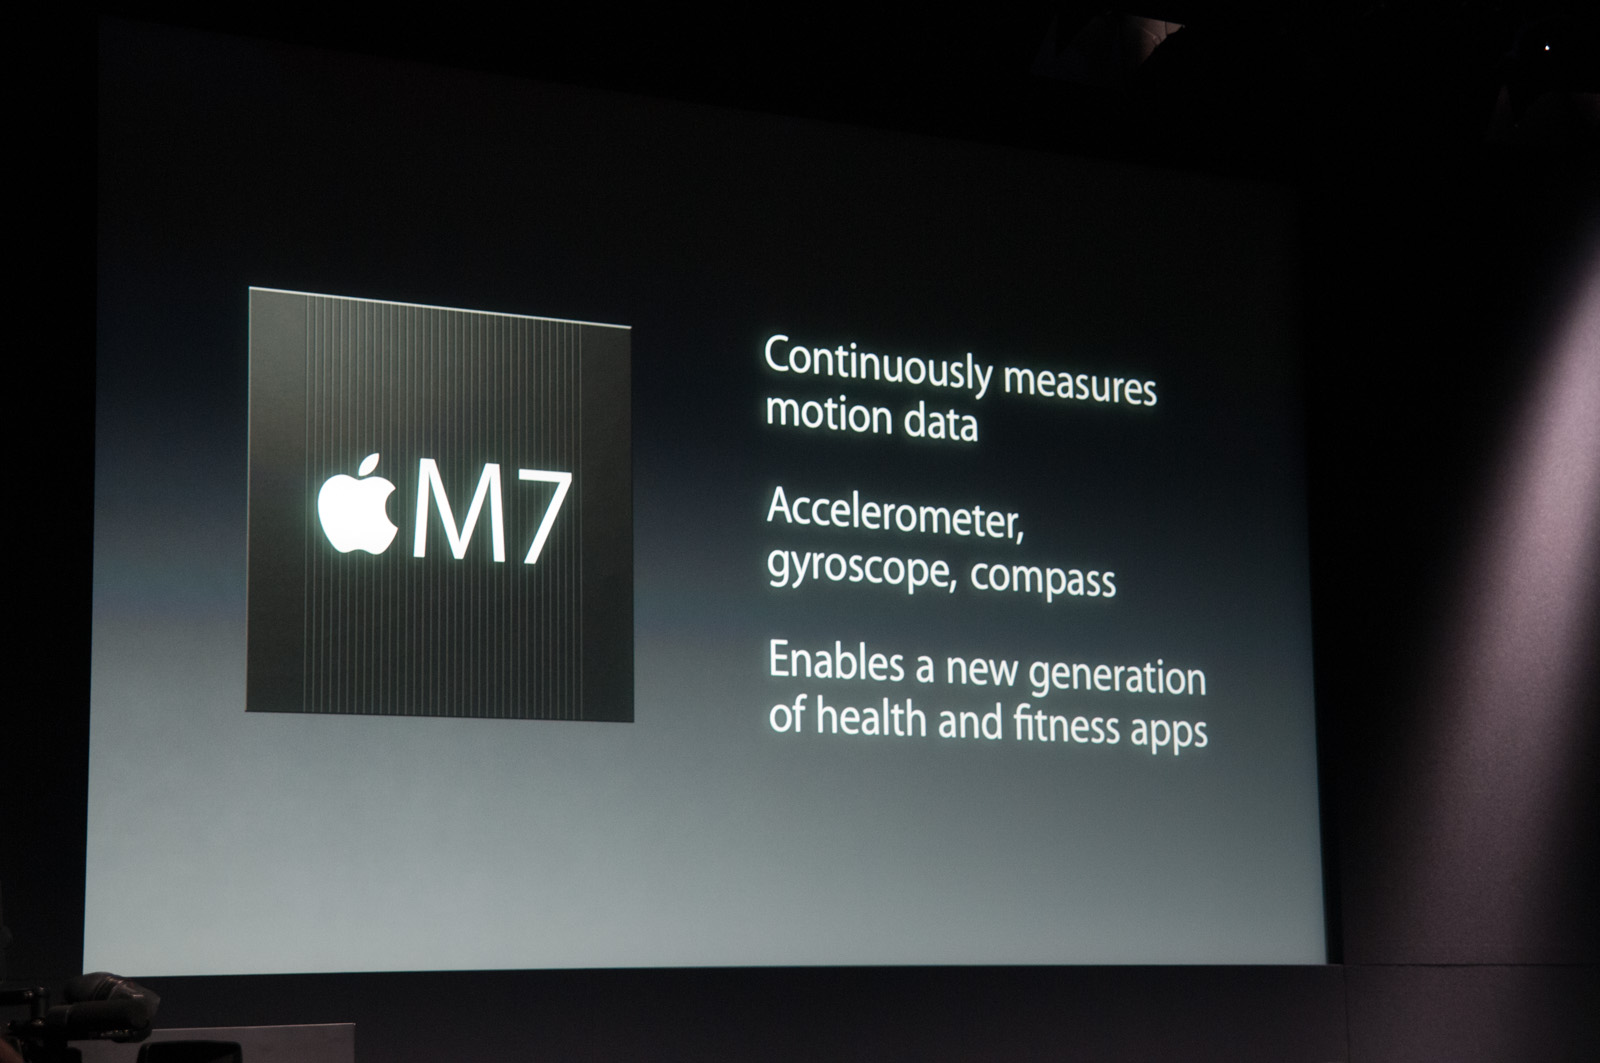 Apple M7